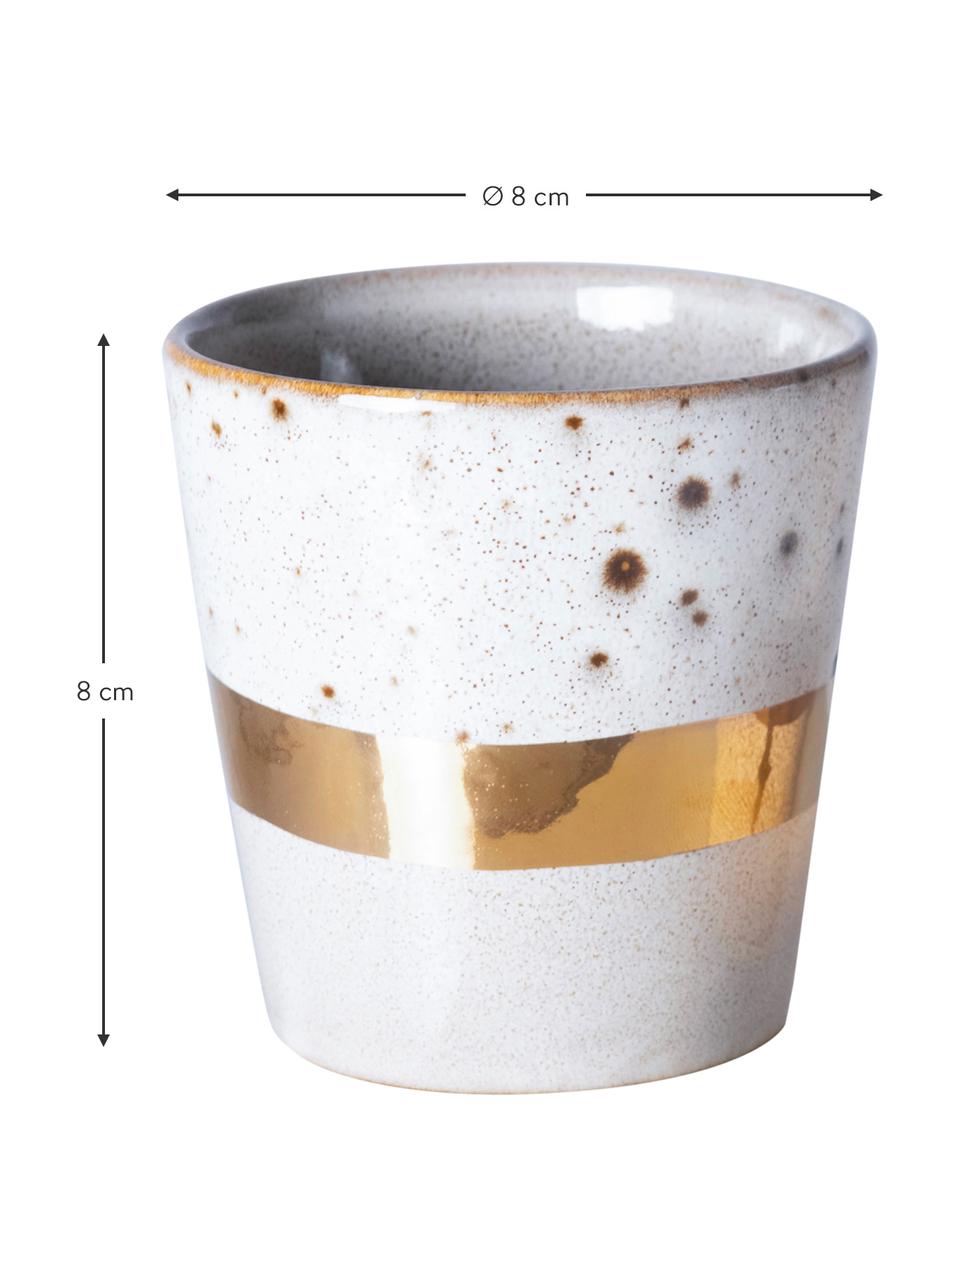 Mug artisanal avec bord doré 70's, Grès cérame, Blanc, couleur dorée, Ø 8 x haut. 8 cm, 180 ml